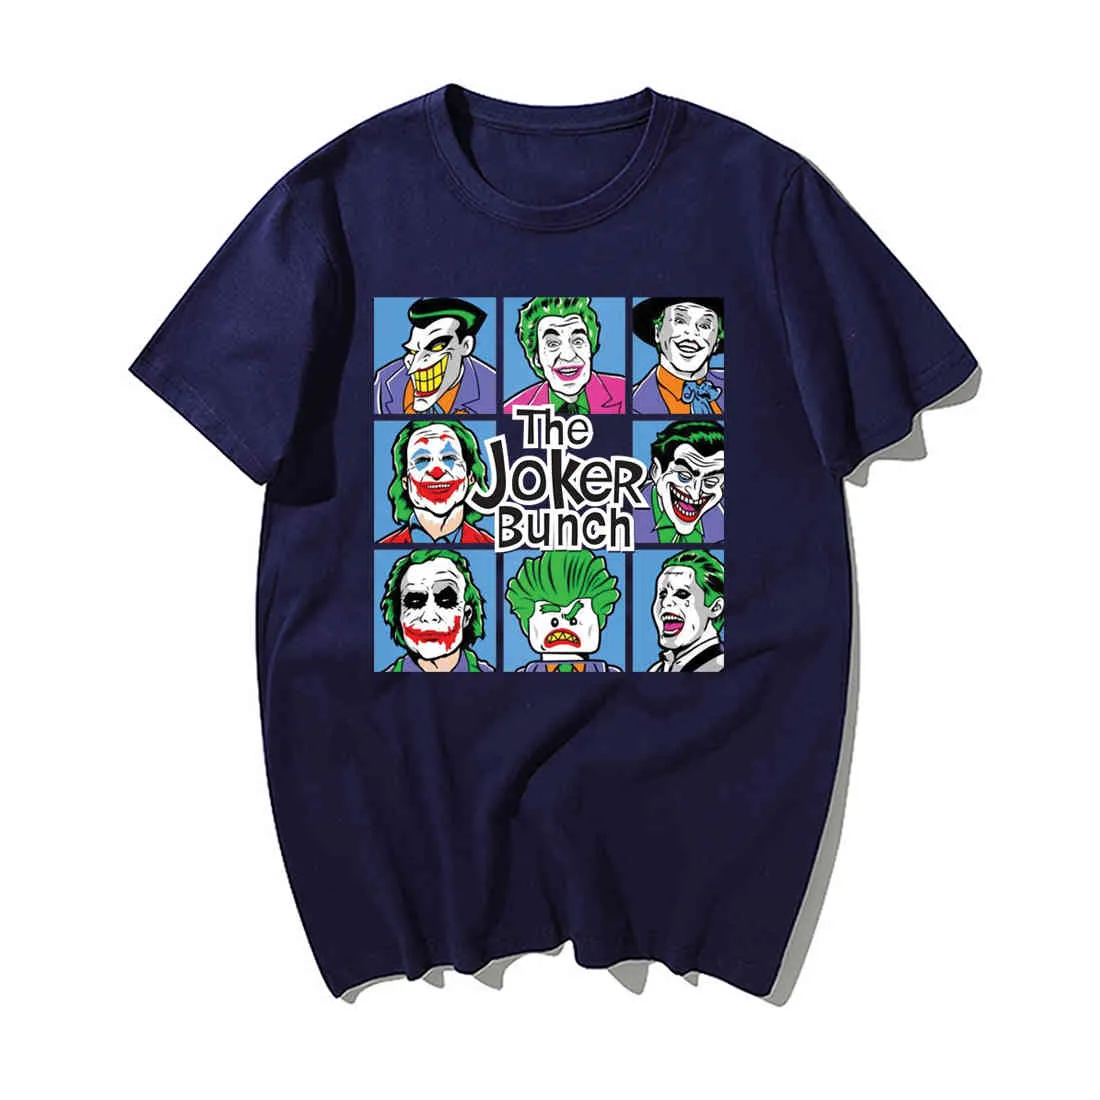 Funny Jokers T Shirt Men Fashion The Joker Bunch Print Tshirt Summer Hip Hop Tops Streetwear Casual Cotton Short Sleeve Tshirts